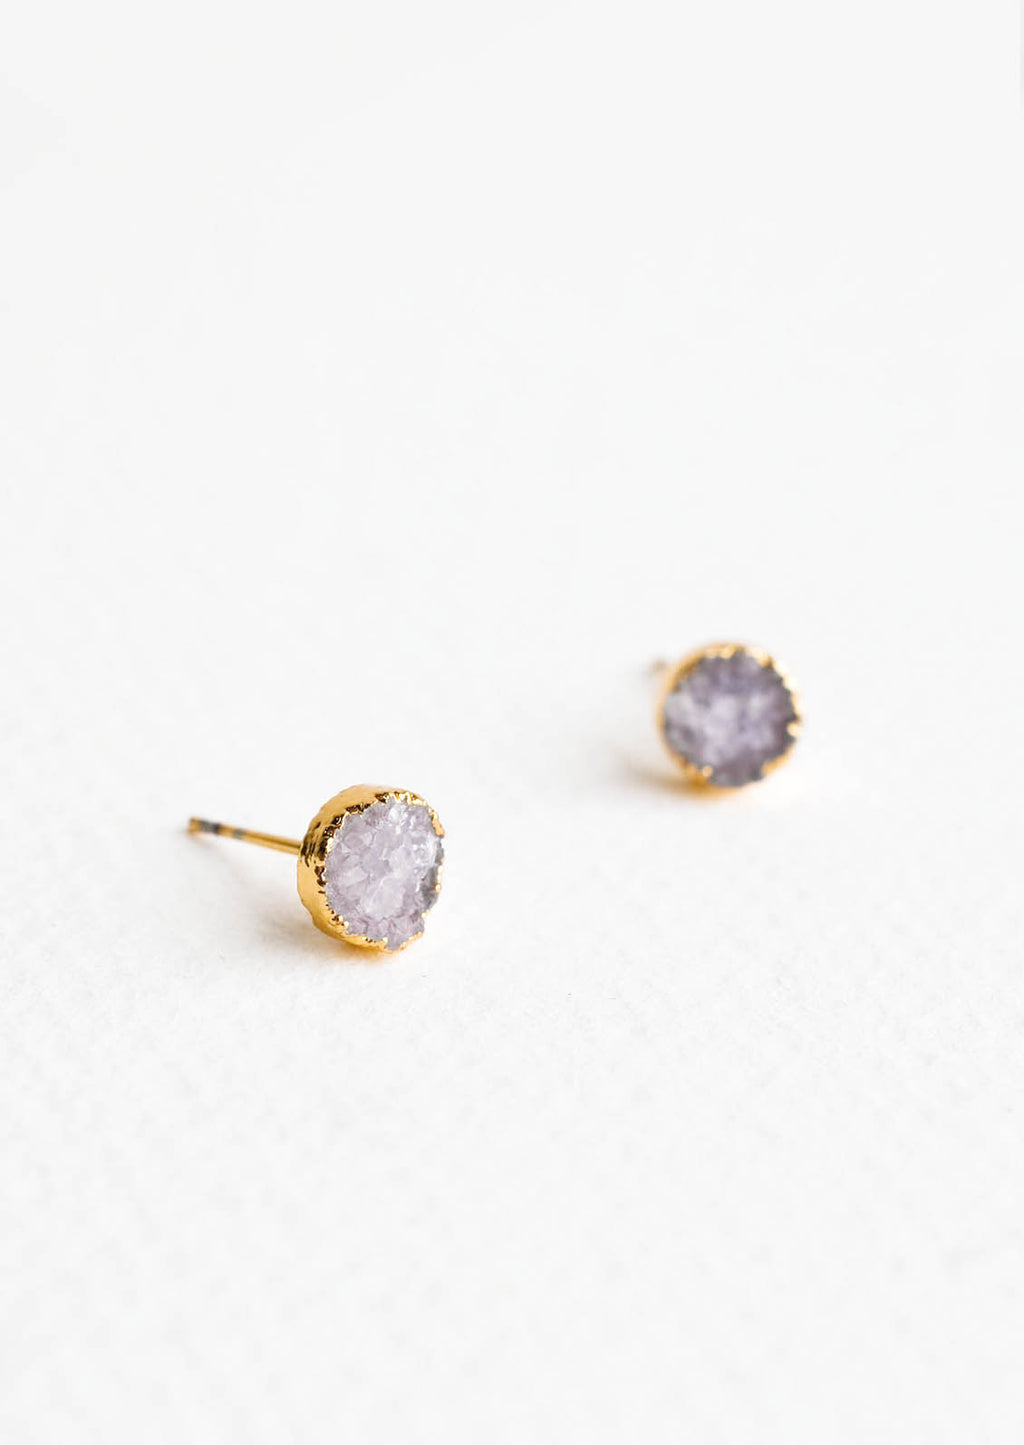 Mercury: Textured gray gemstone studs with gold surround.